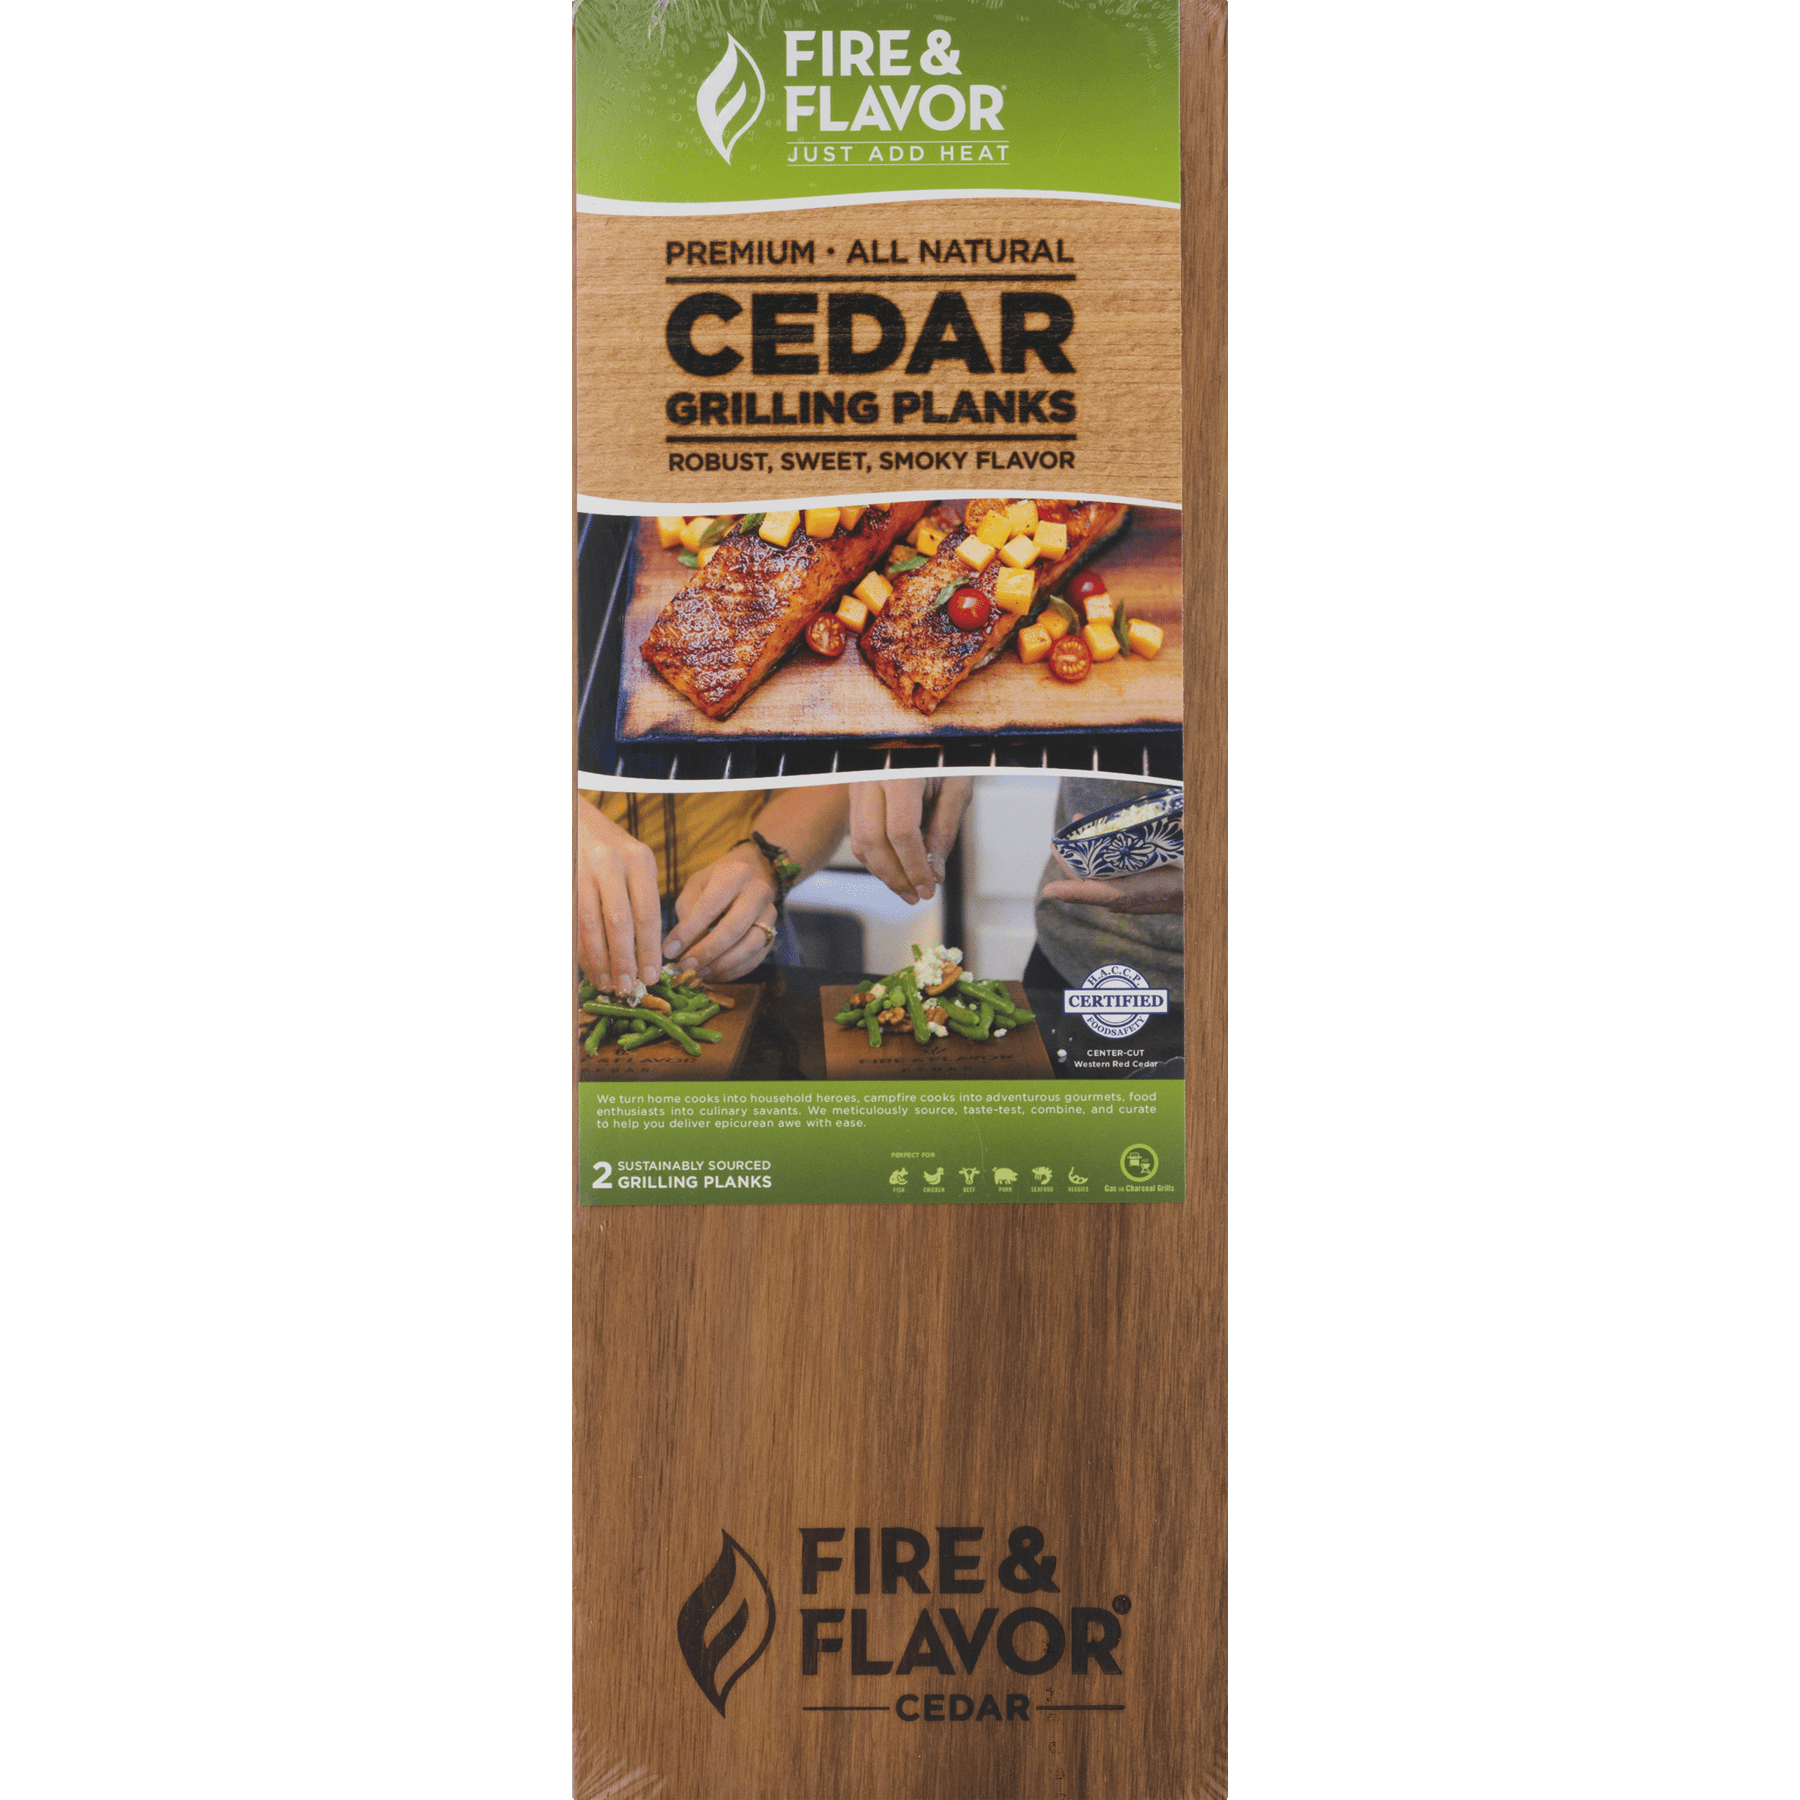 5.5 x 5.5 Fire & Flavor Natural Red Cedar Medium Grilling Planks Bulk Size 48 Count 